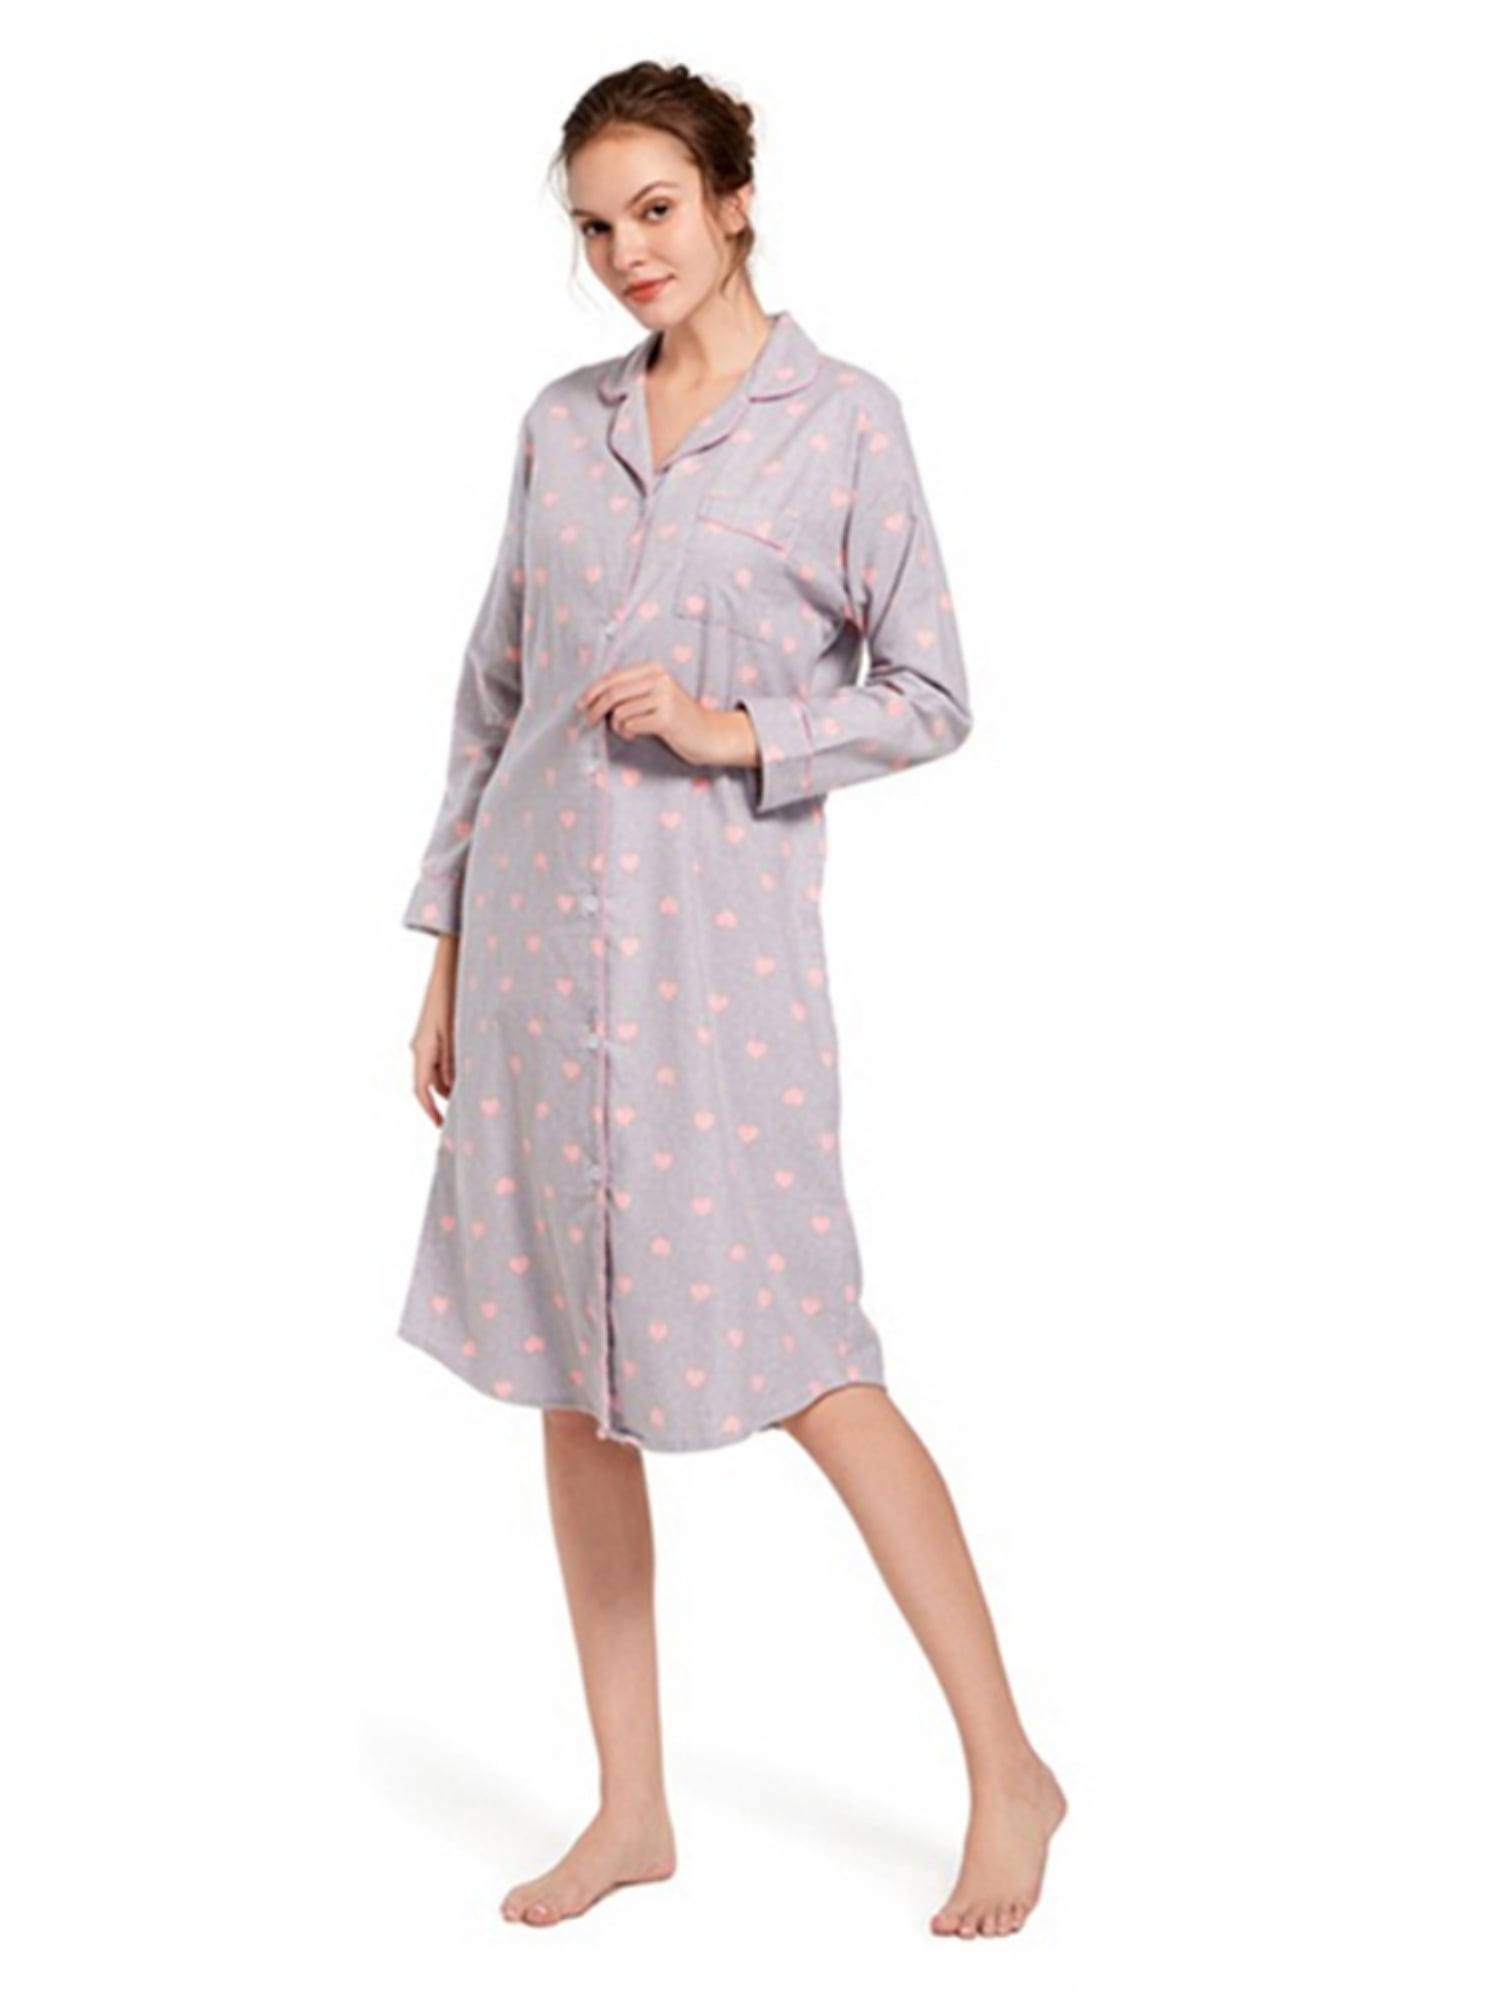 CATALOG CLASSICS Womens Nightgown Henley Night Shirt 100% Cotton Night Gown,  Green/Burgundy, Missy (8-18), 46